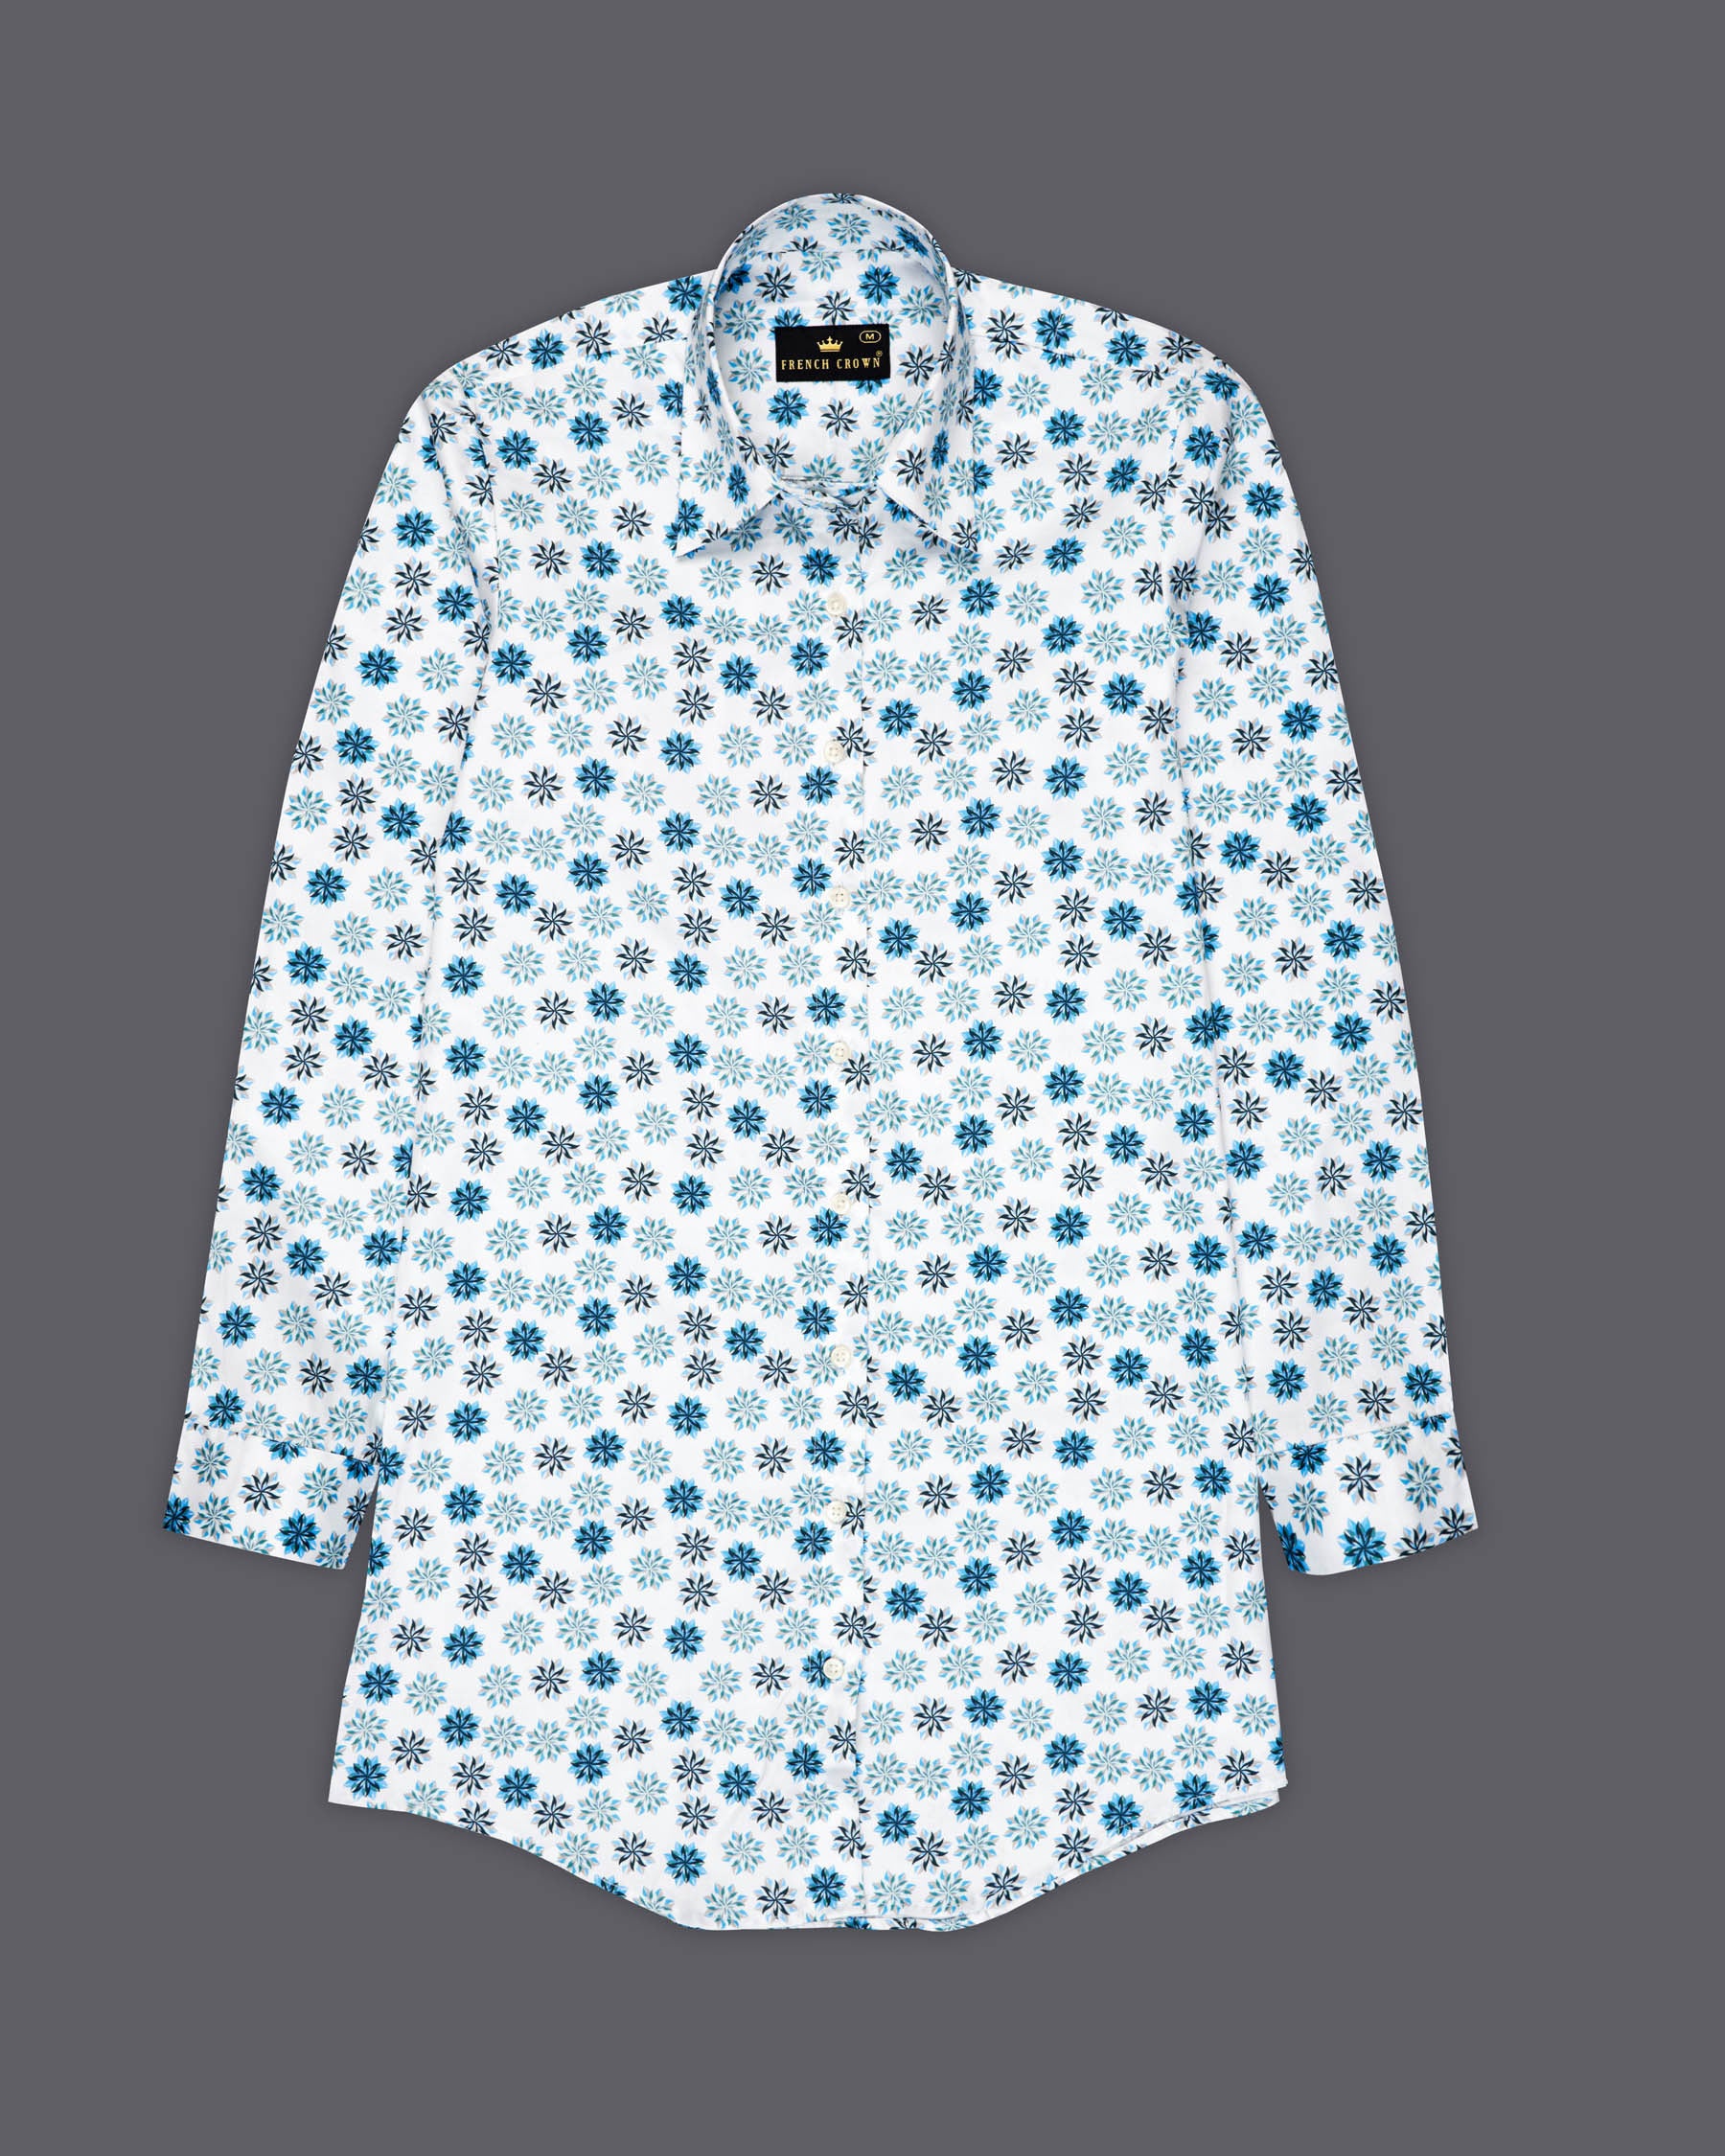 Bright White with Curious Blue Printed Super Soft Premium Cotton Women’s Shirt WS057-32, WS057-34, WS057-36, WS057-38, WS057-40, WS057-42